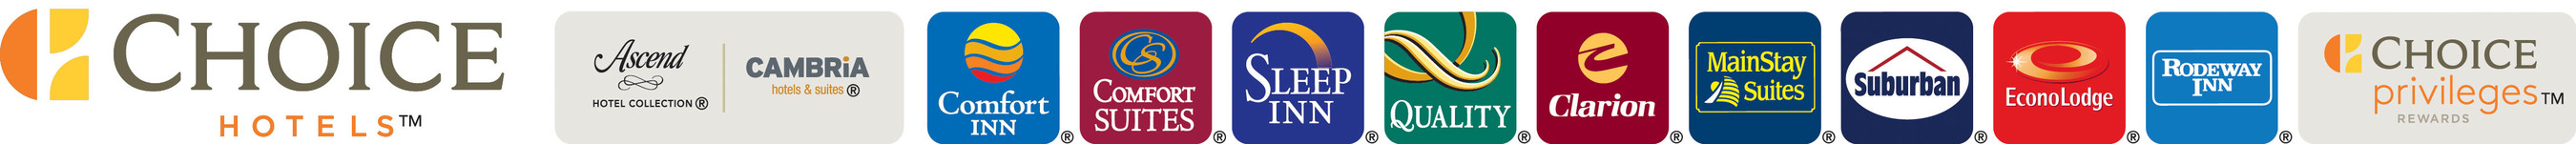 Choice Hotels International Logo chain